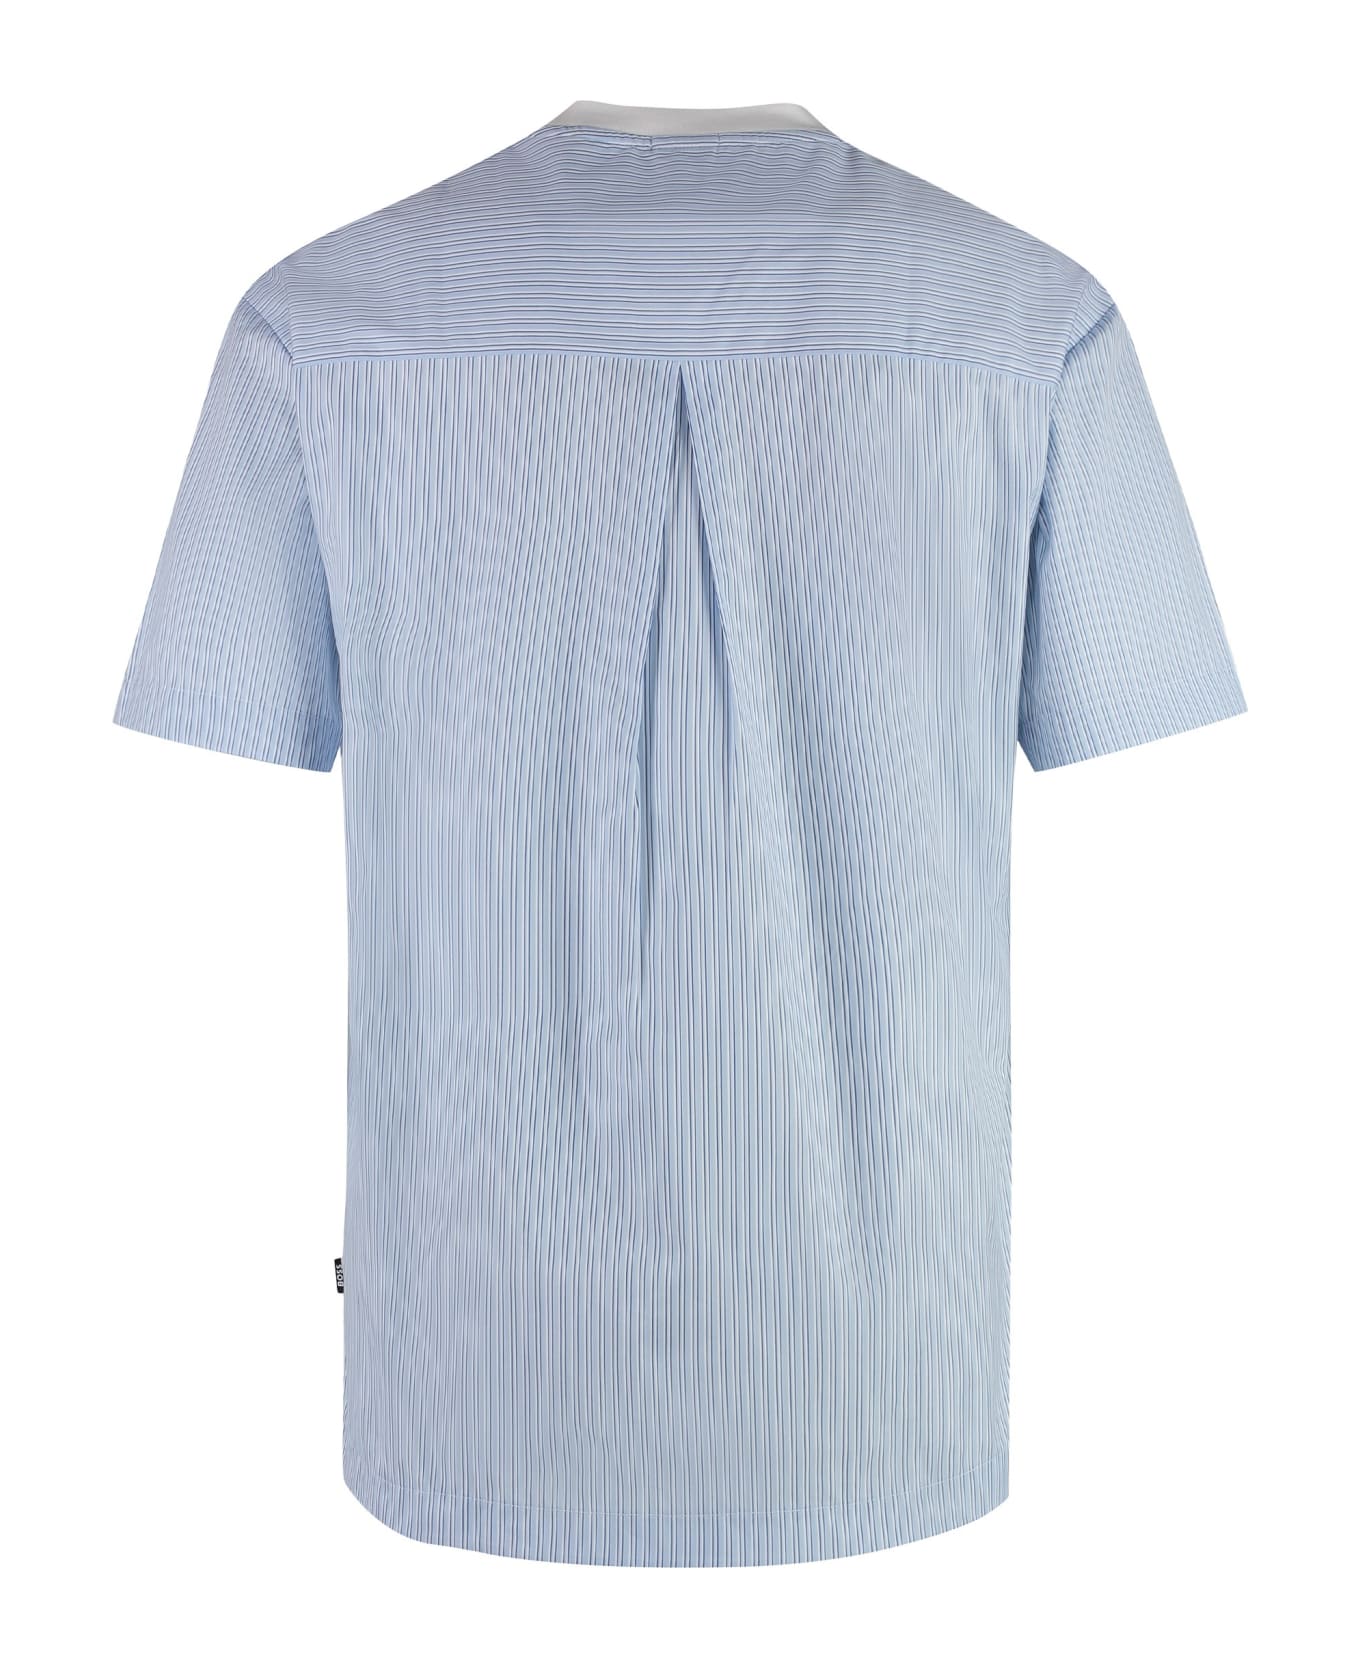 Hugo Boss Cotton Crew-neck T-shirt - White シャツ